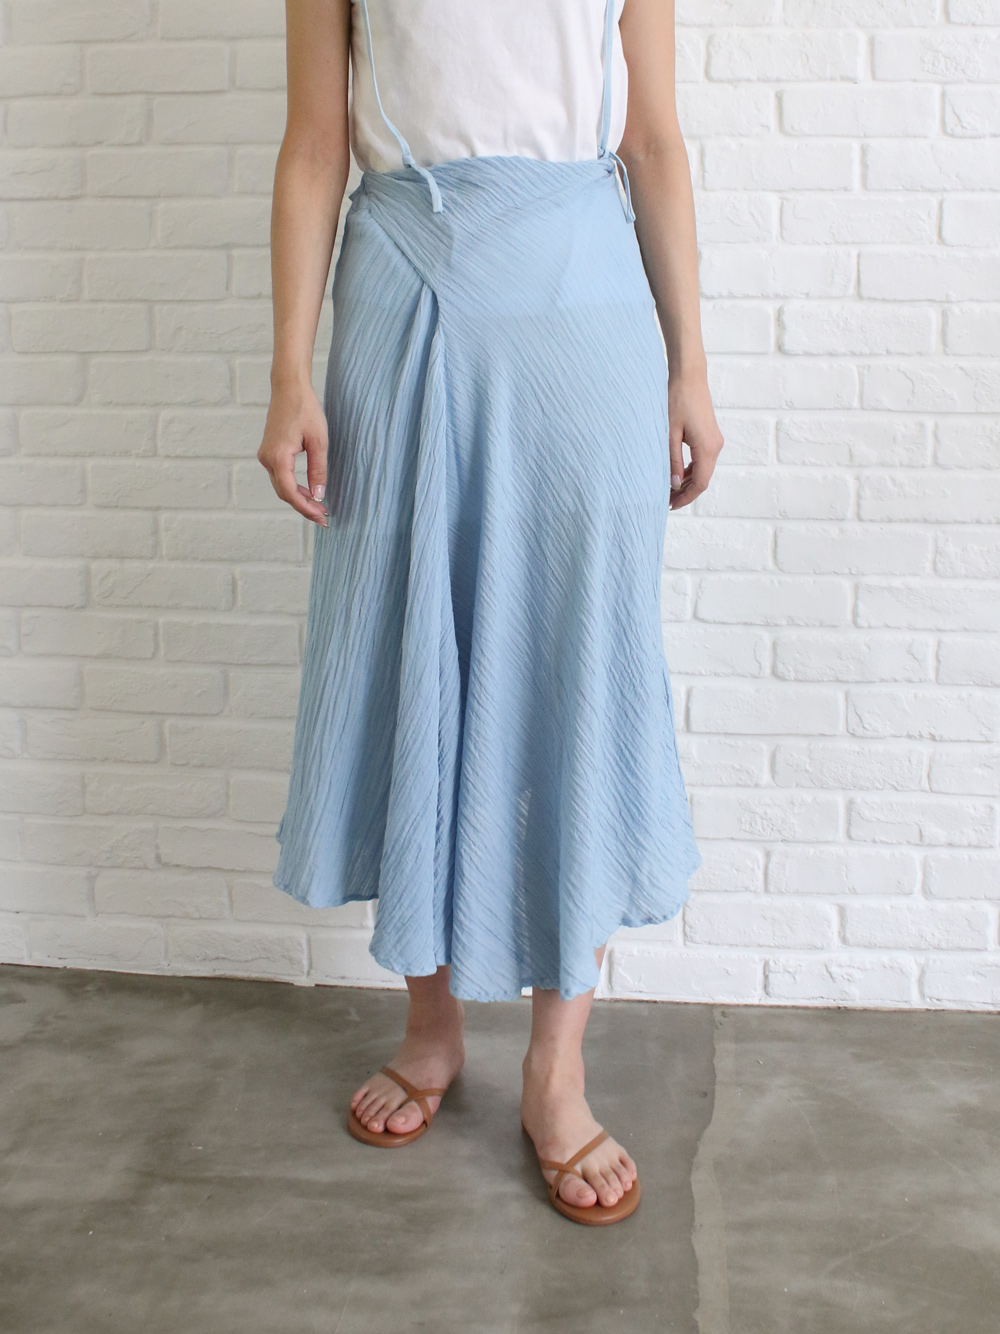 natural dye pleats drape skirt